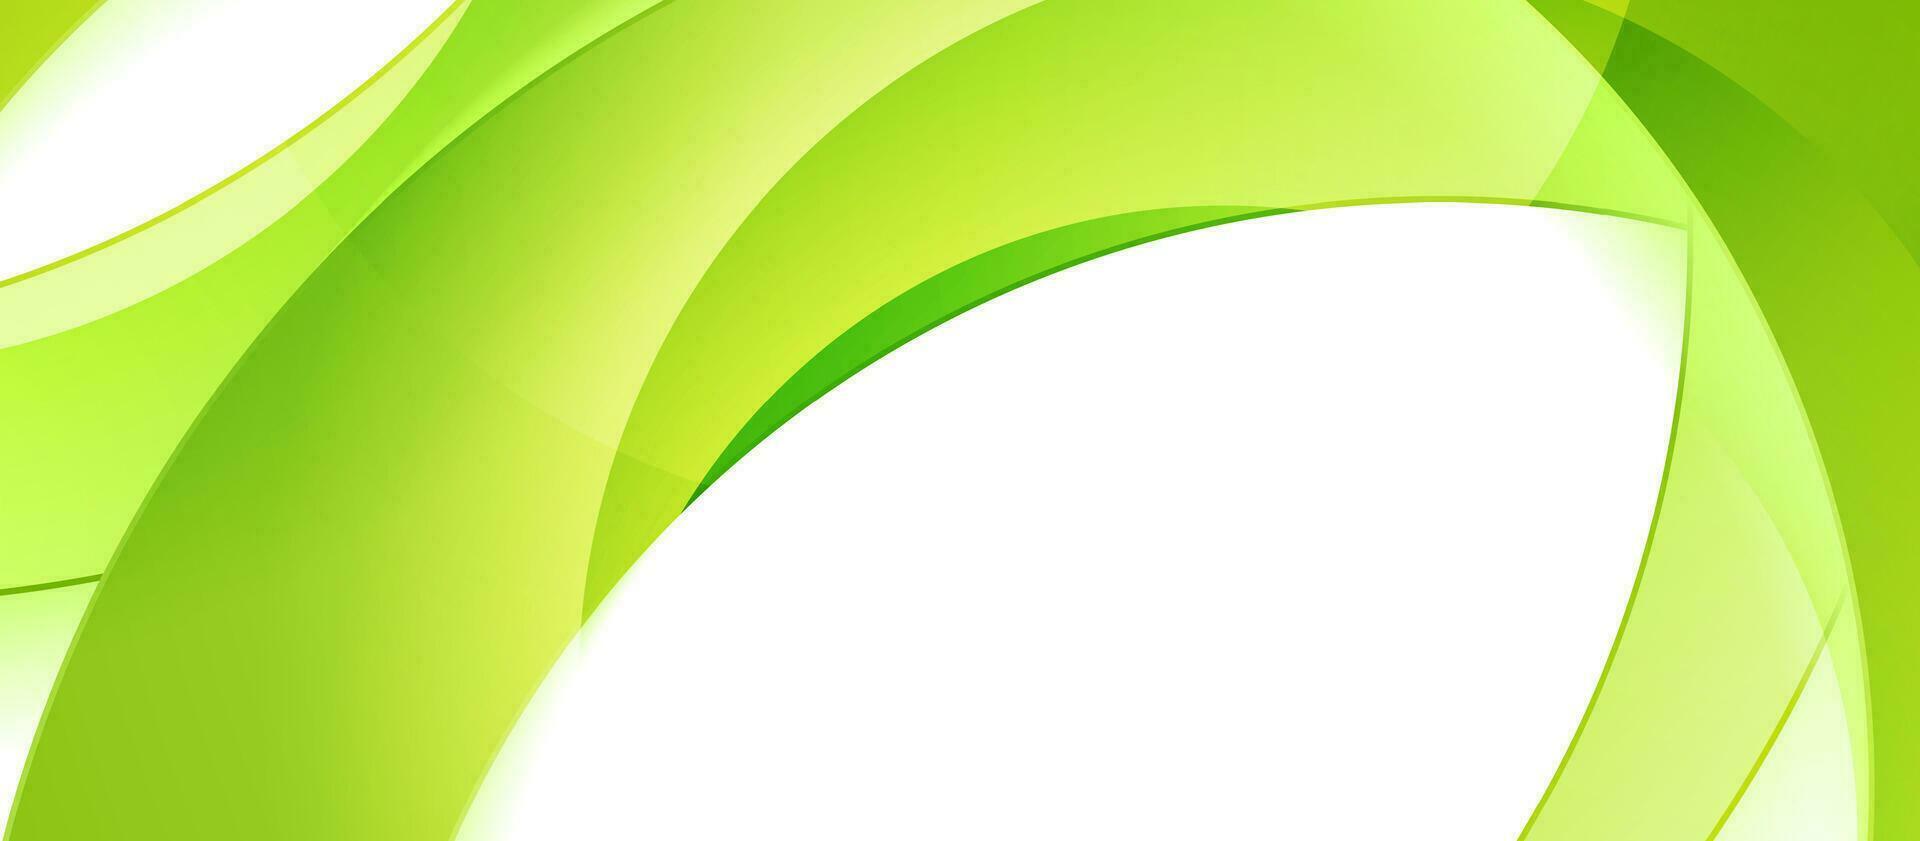 groen wit meetkundig tech achtergrond met glanzend golvend vormen vector